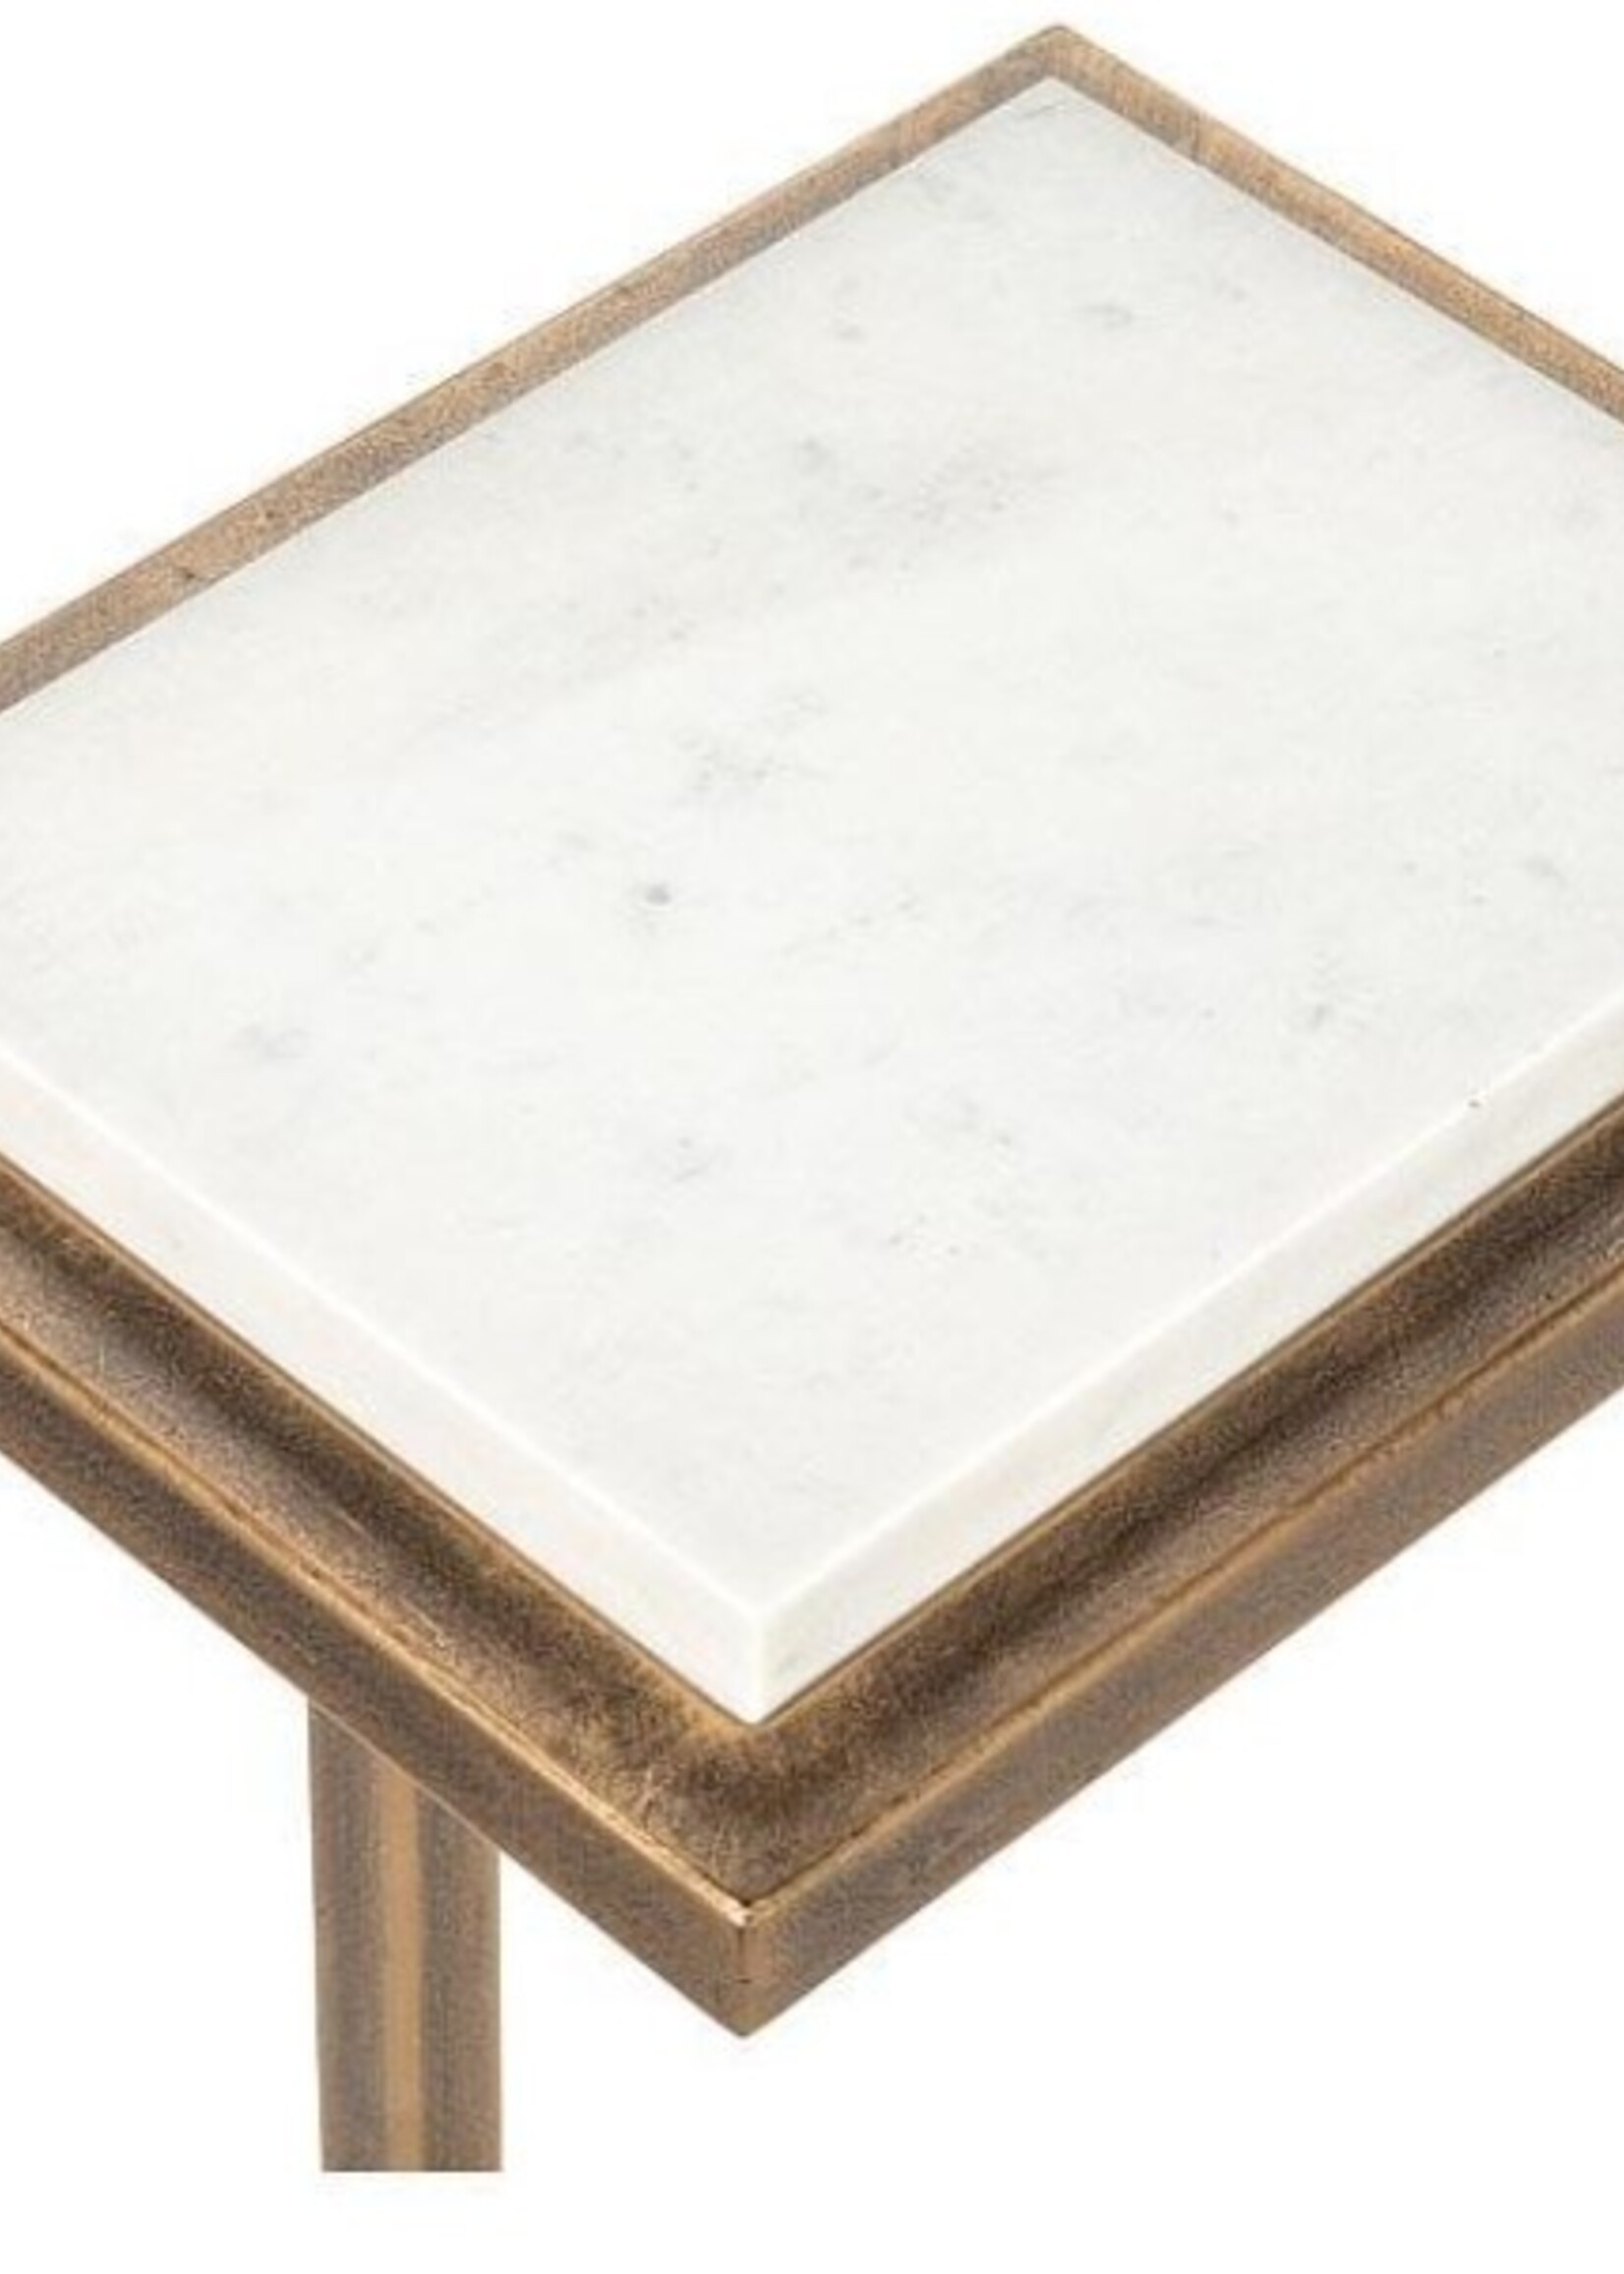 Abbott Martini Table * Antique Gold & White Marble * 23" High